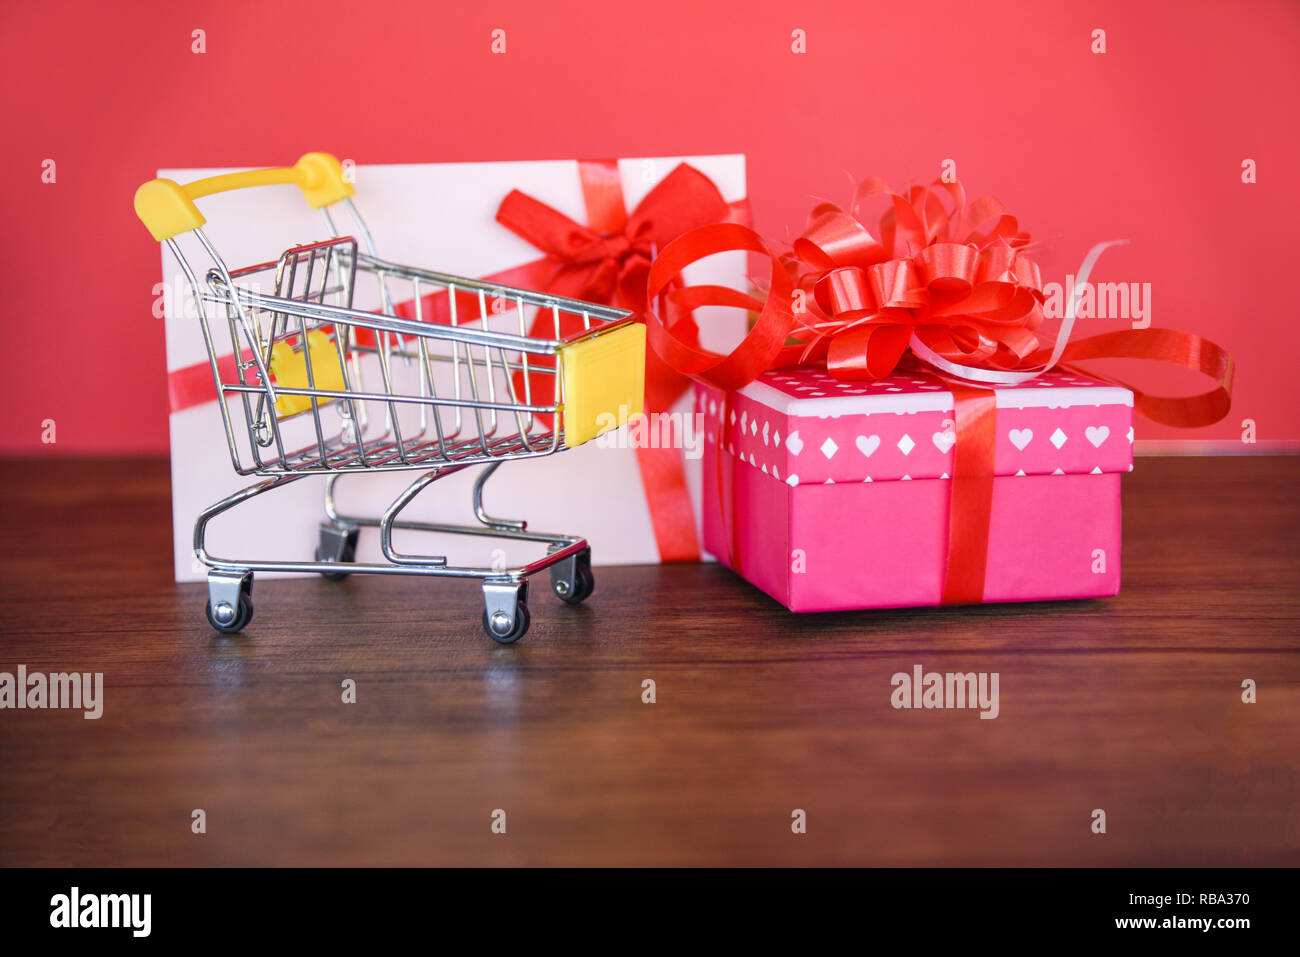 Día de San Valentín compras y Gift Card Gift Box compras / Rosa presentes  caja con cinta roja tarjeta regalo de proa a Merry Christmas Holiday happy  new yea Fotografía de stock -